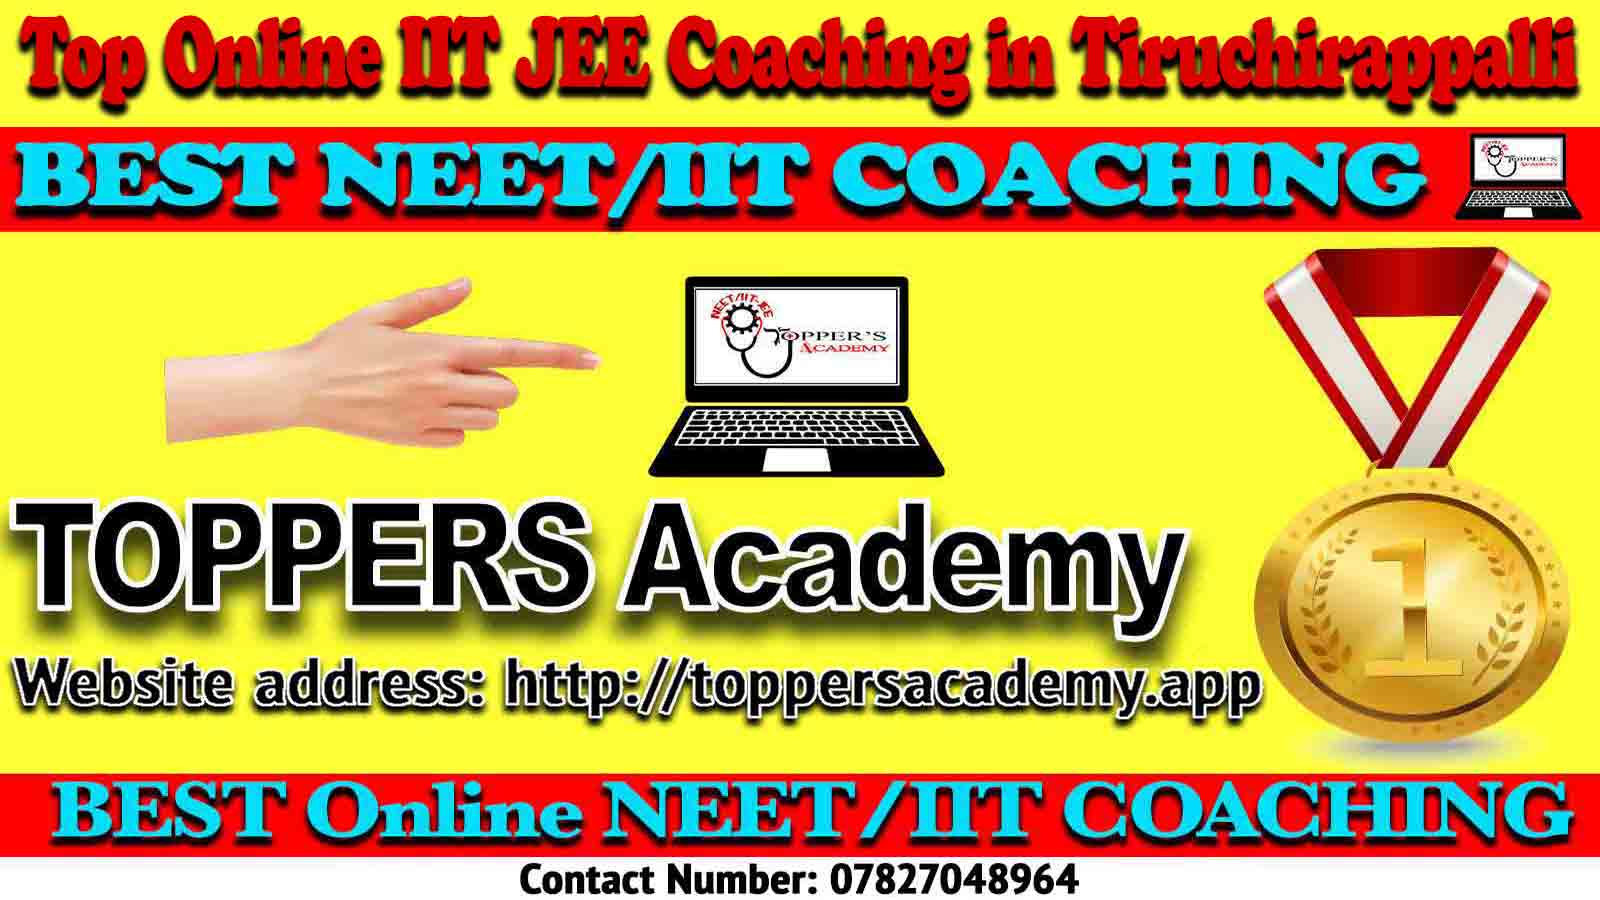 Best Online IIT JEE Coaching in Tiruchirappalli